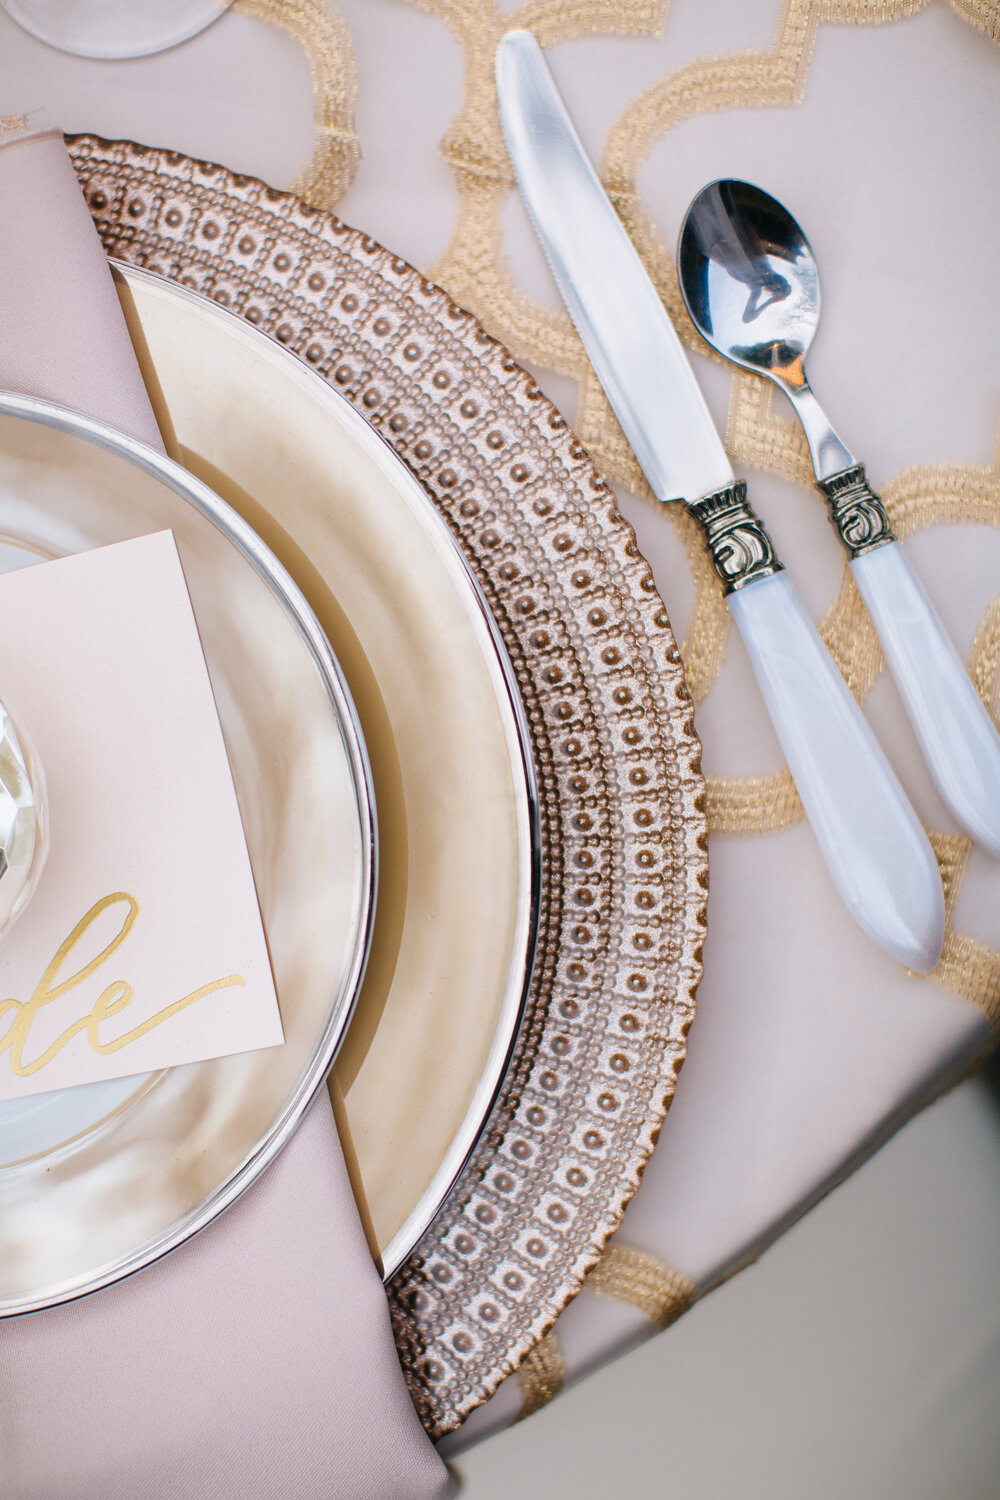 luxury-wedding-table-details-blushes-whites-upscale-calligraphy-ashbaumgartner-ribbon-inspiration-northern-california-sonoma-v-sattui-florist-violette-fleurs-anna-perevertaylo.jpg